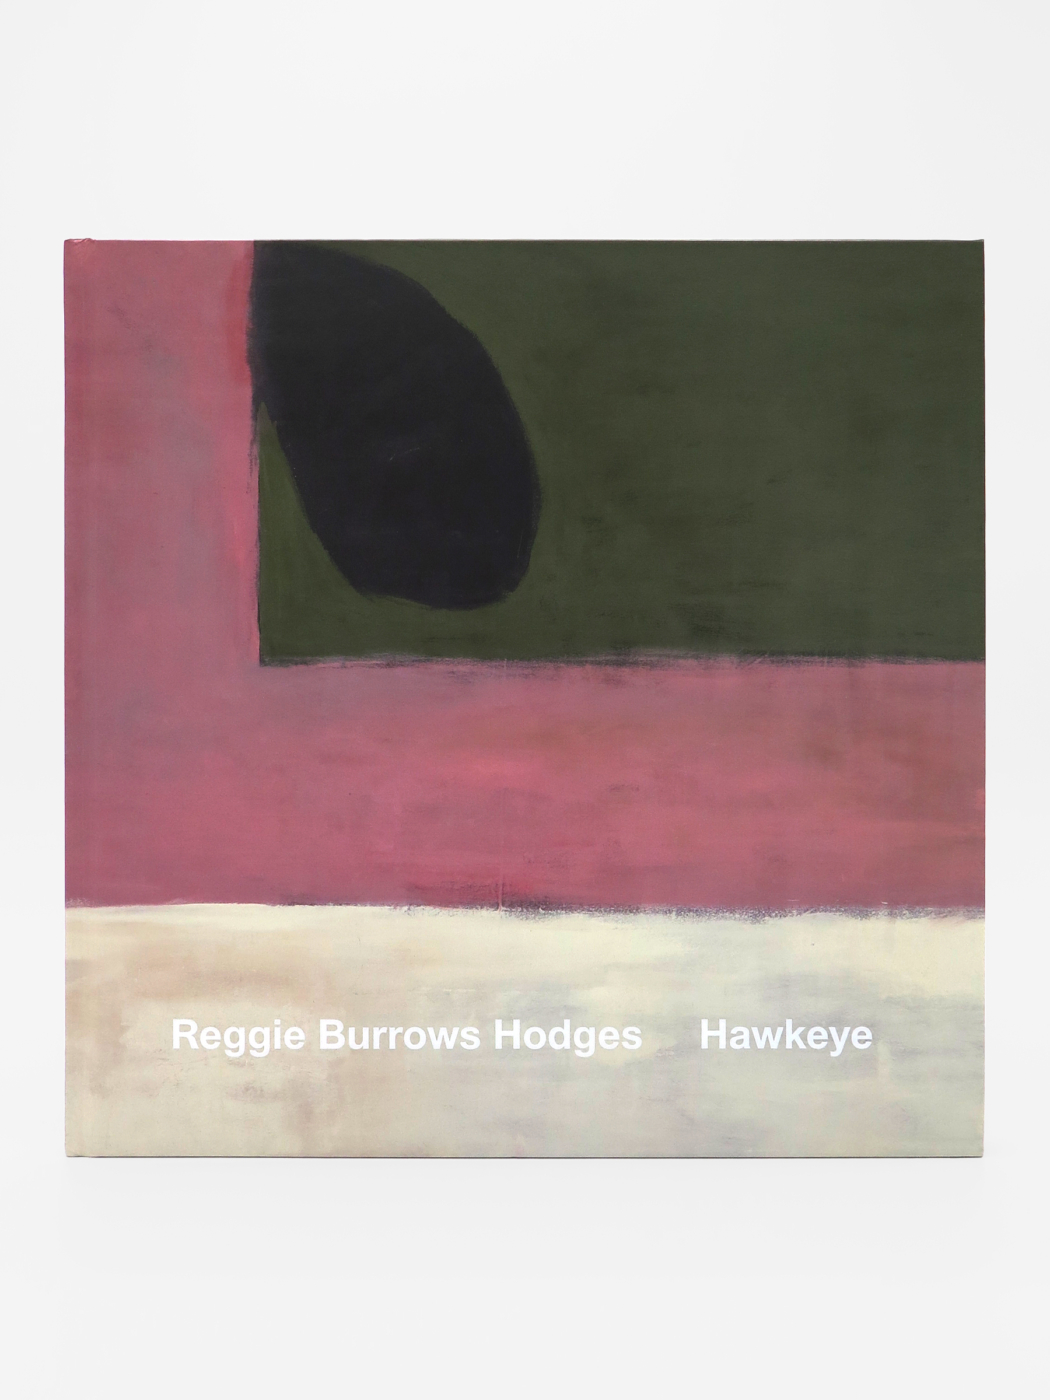 Reggie Burrows Hodges, Hawkeye